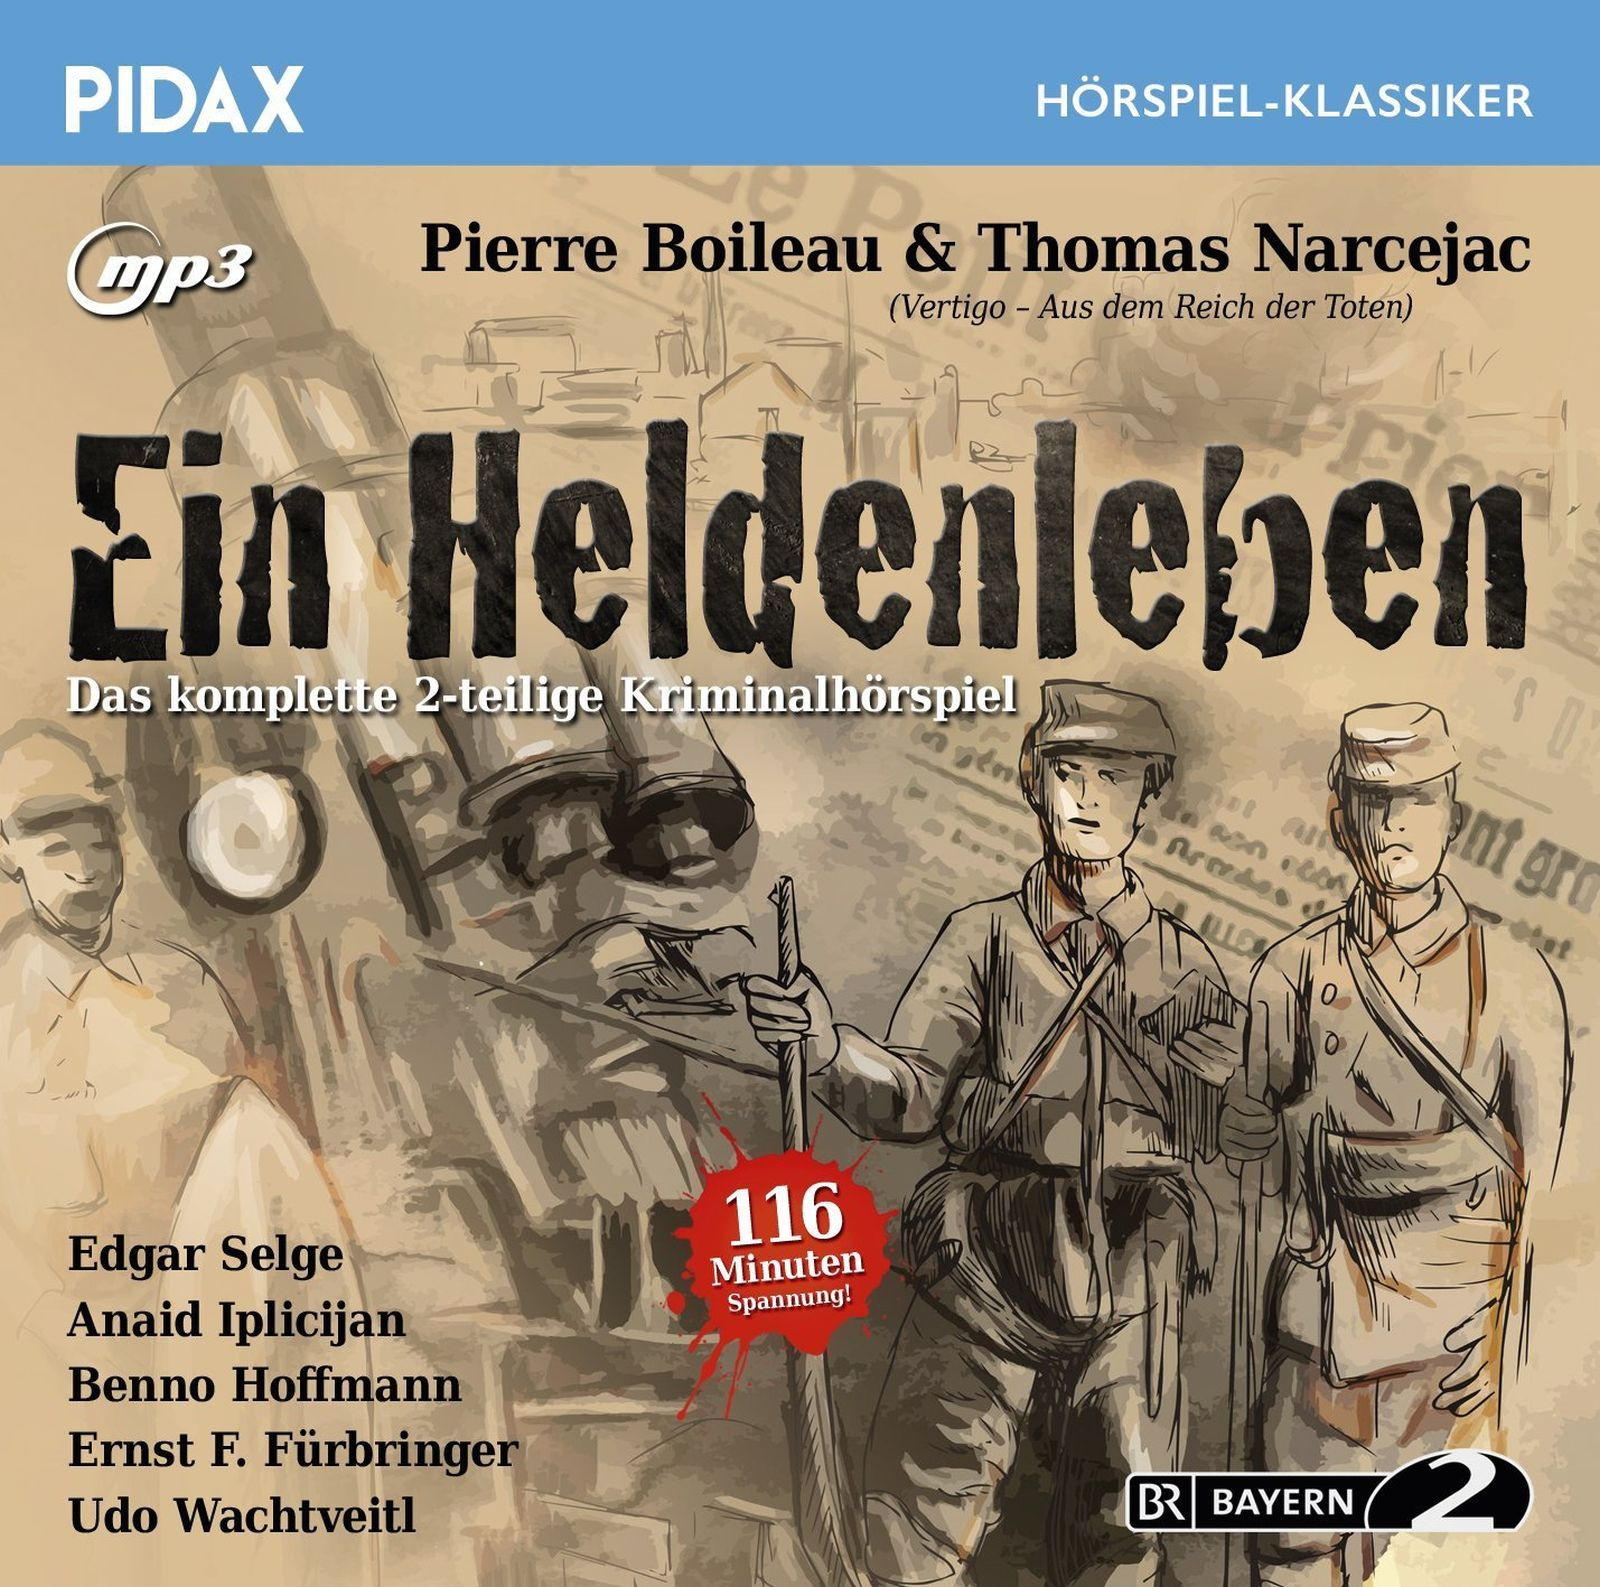 Pidax Hörspiel Klassiker - Ein Heldenleben